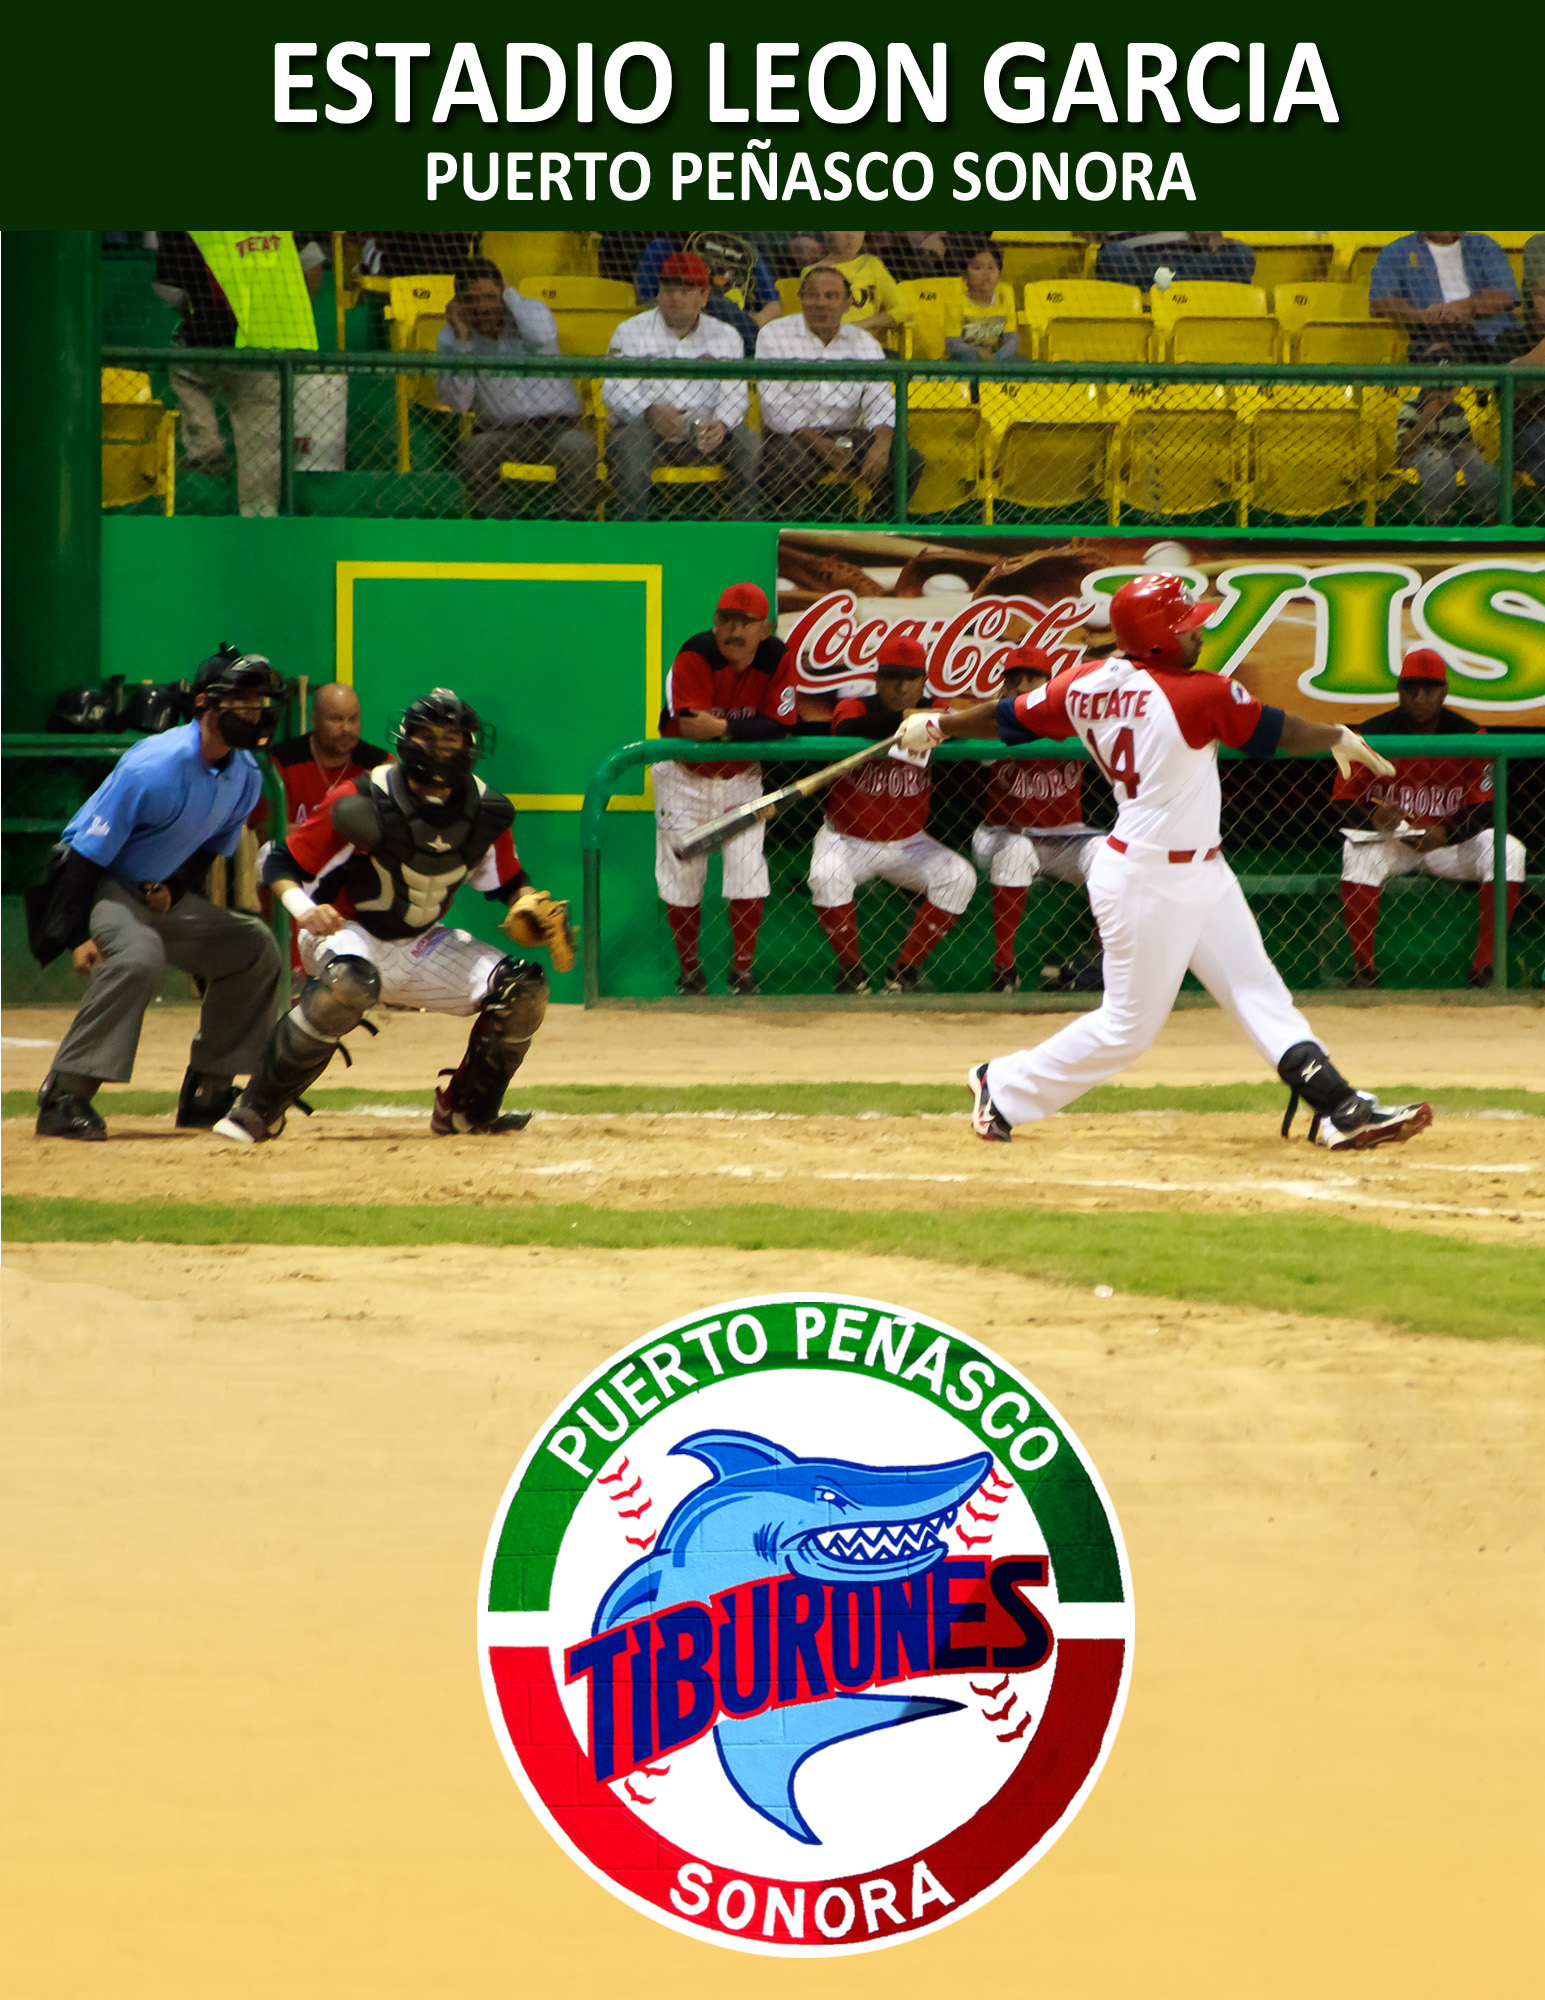 baseball-tiburones-estadio-leon-garcia-poster Tiburones lead League heading into playoffs